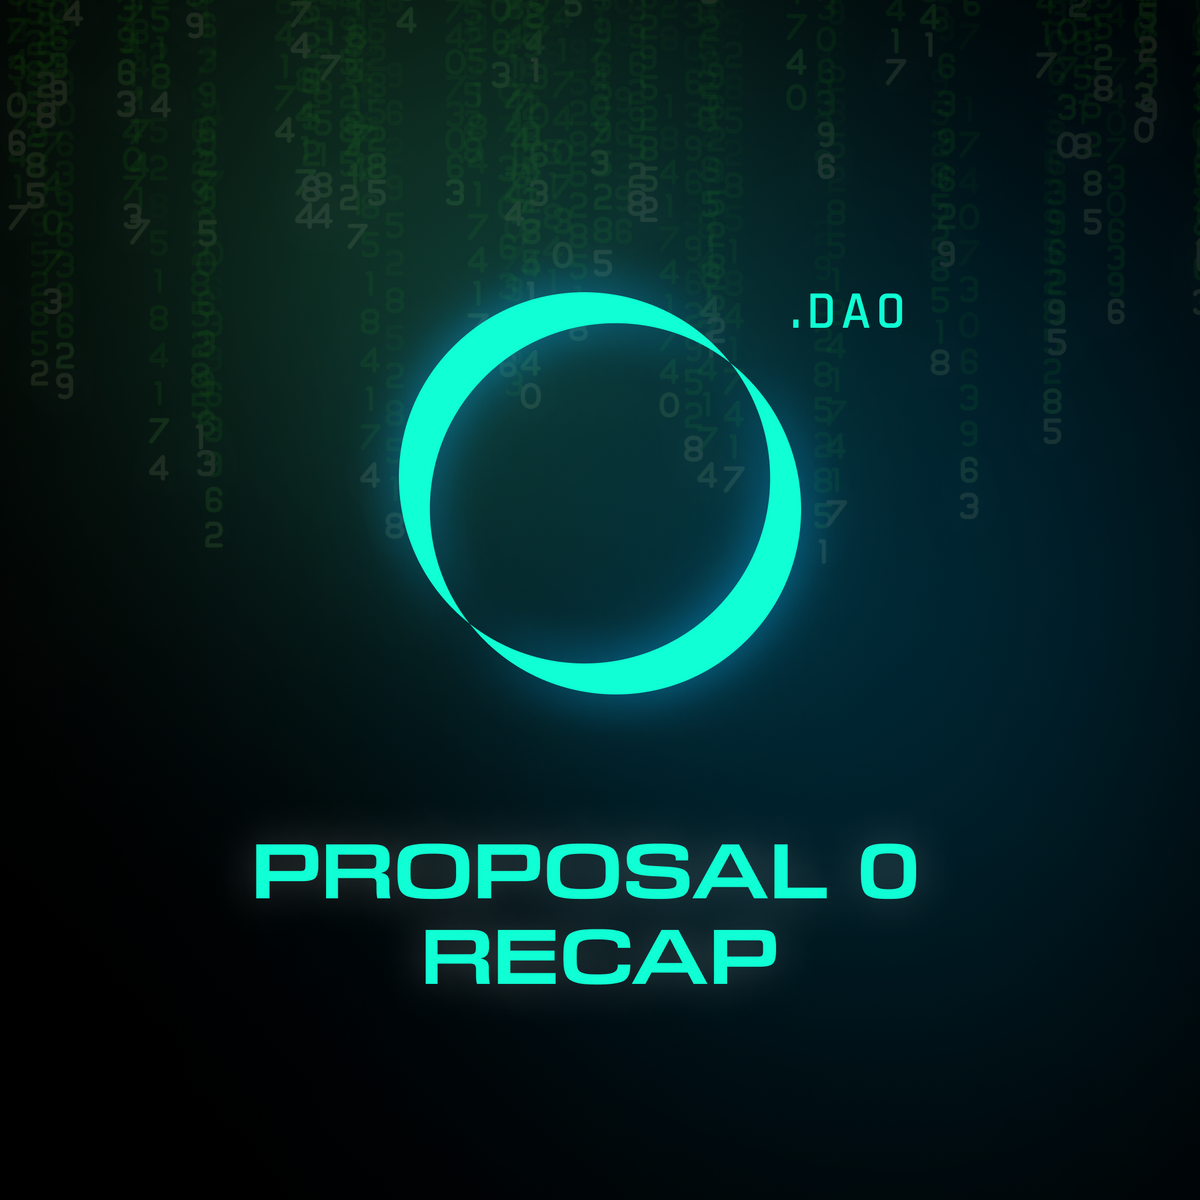 Proposal 0 Recap